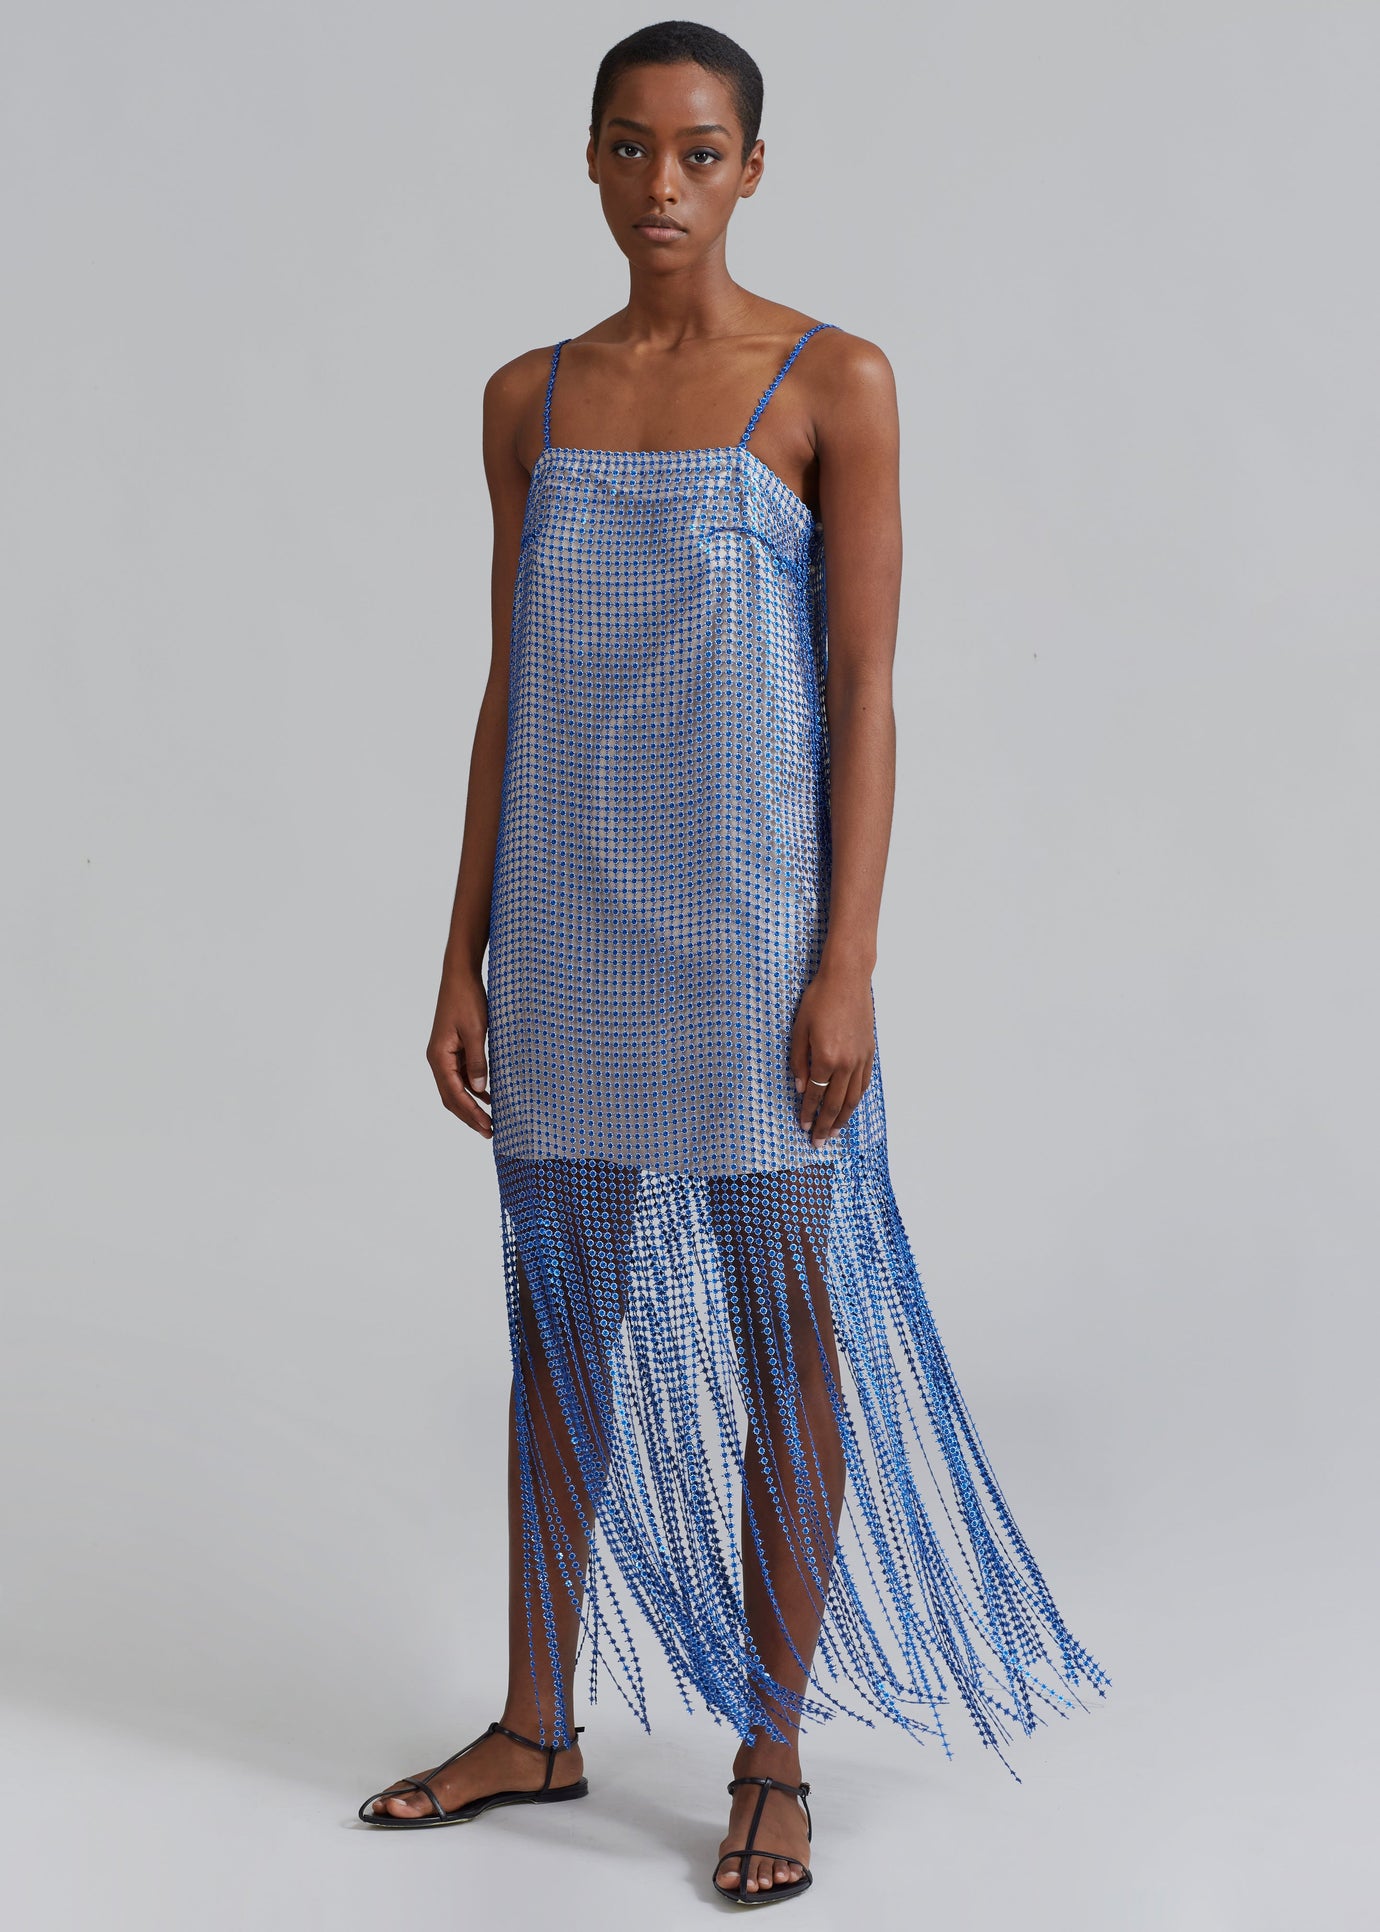 REMAIN Sequin Lace Fringe Dress - Surf The Web Comb.